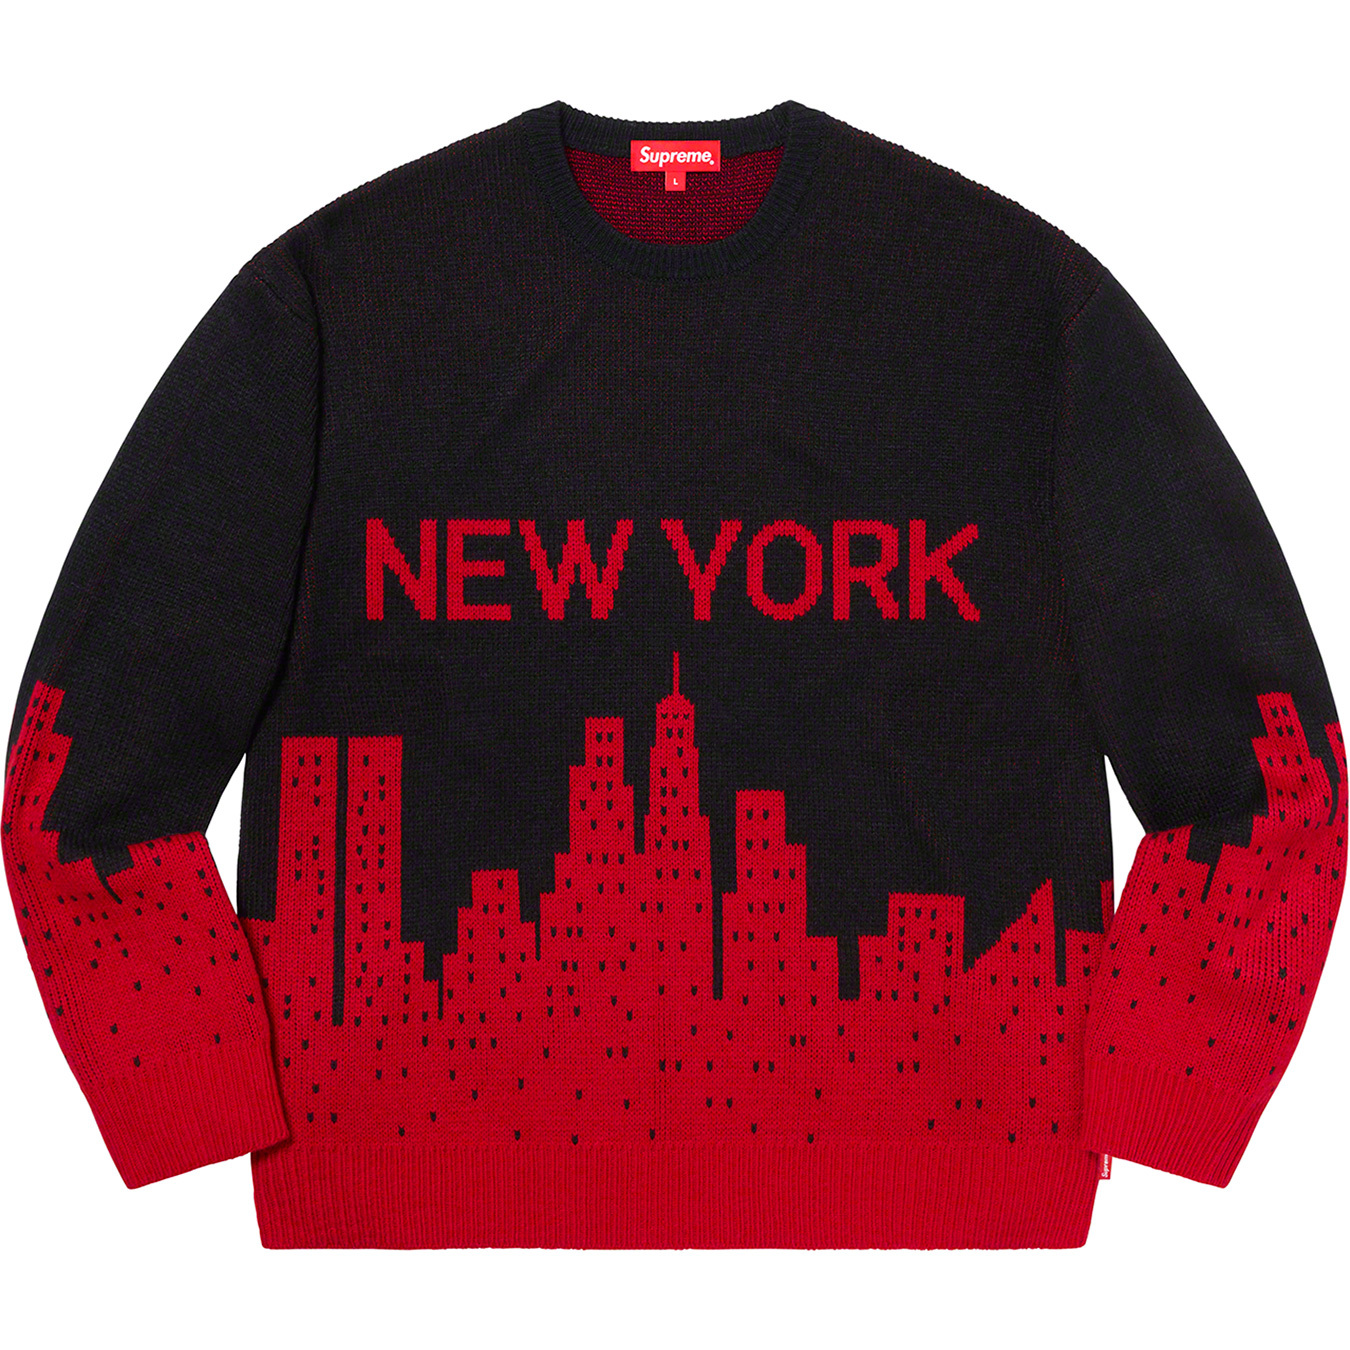 New York Sweater - spring summer 2020 - Supreme